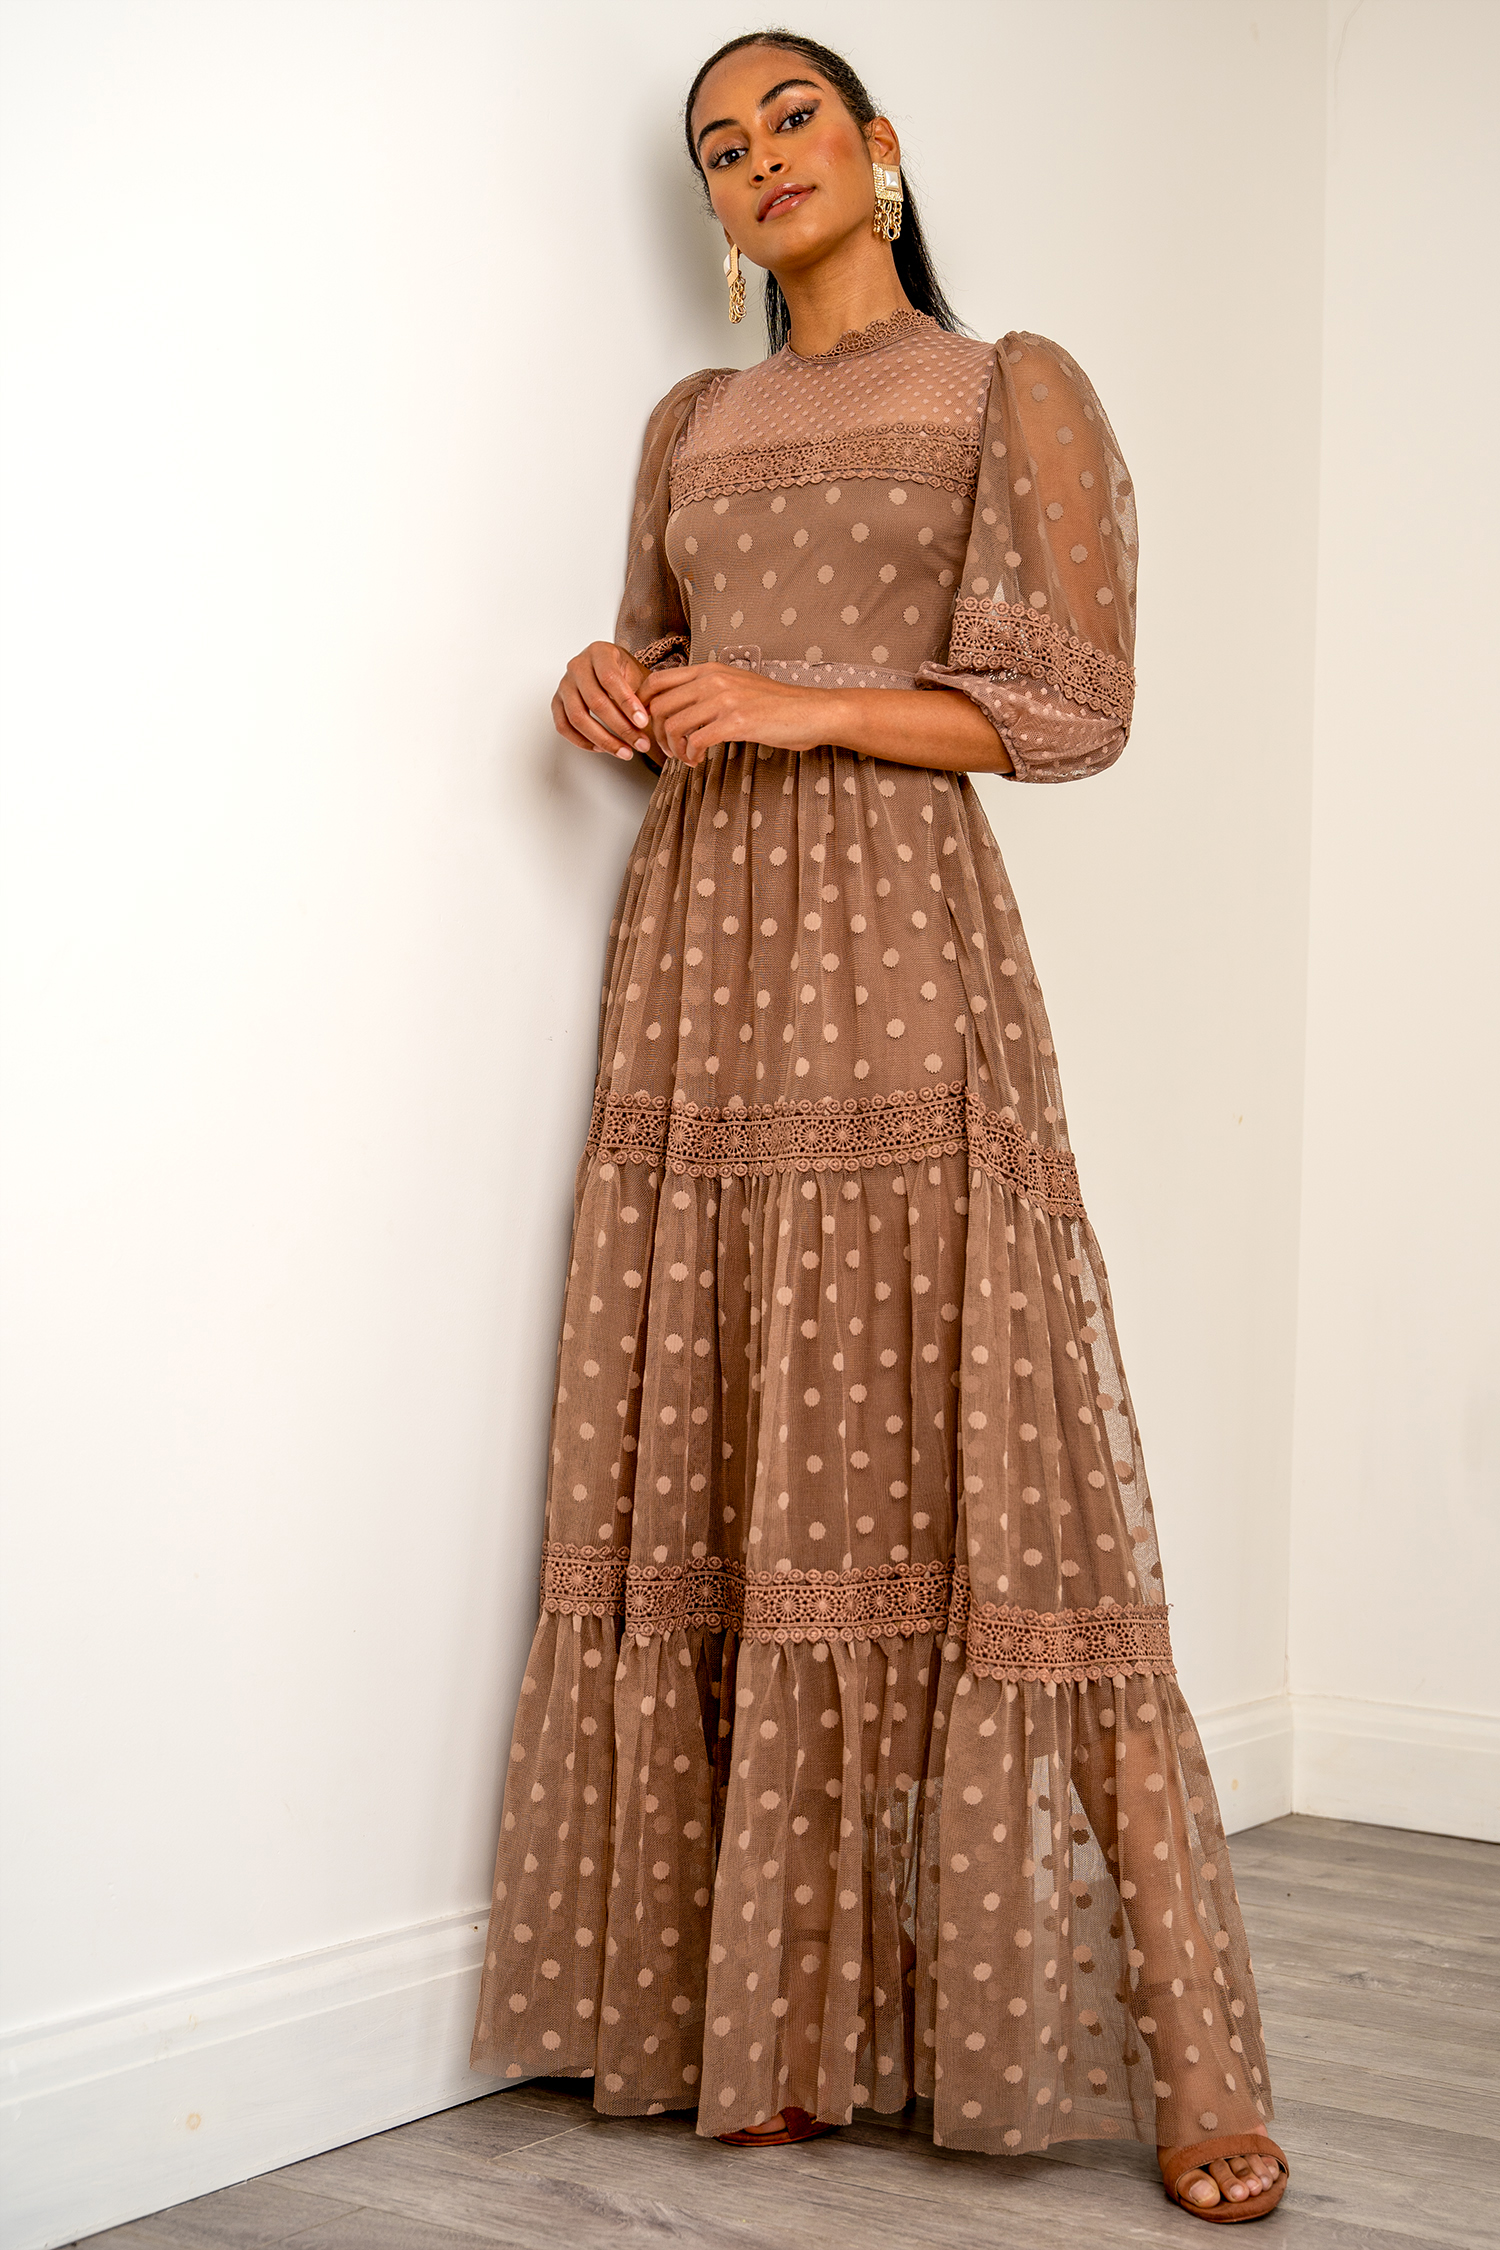 Meri Lace Detail Brown Dress